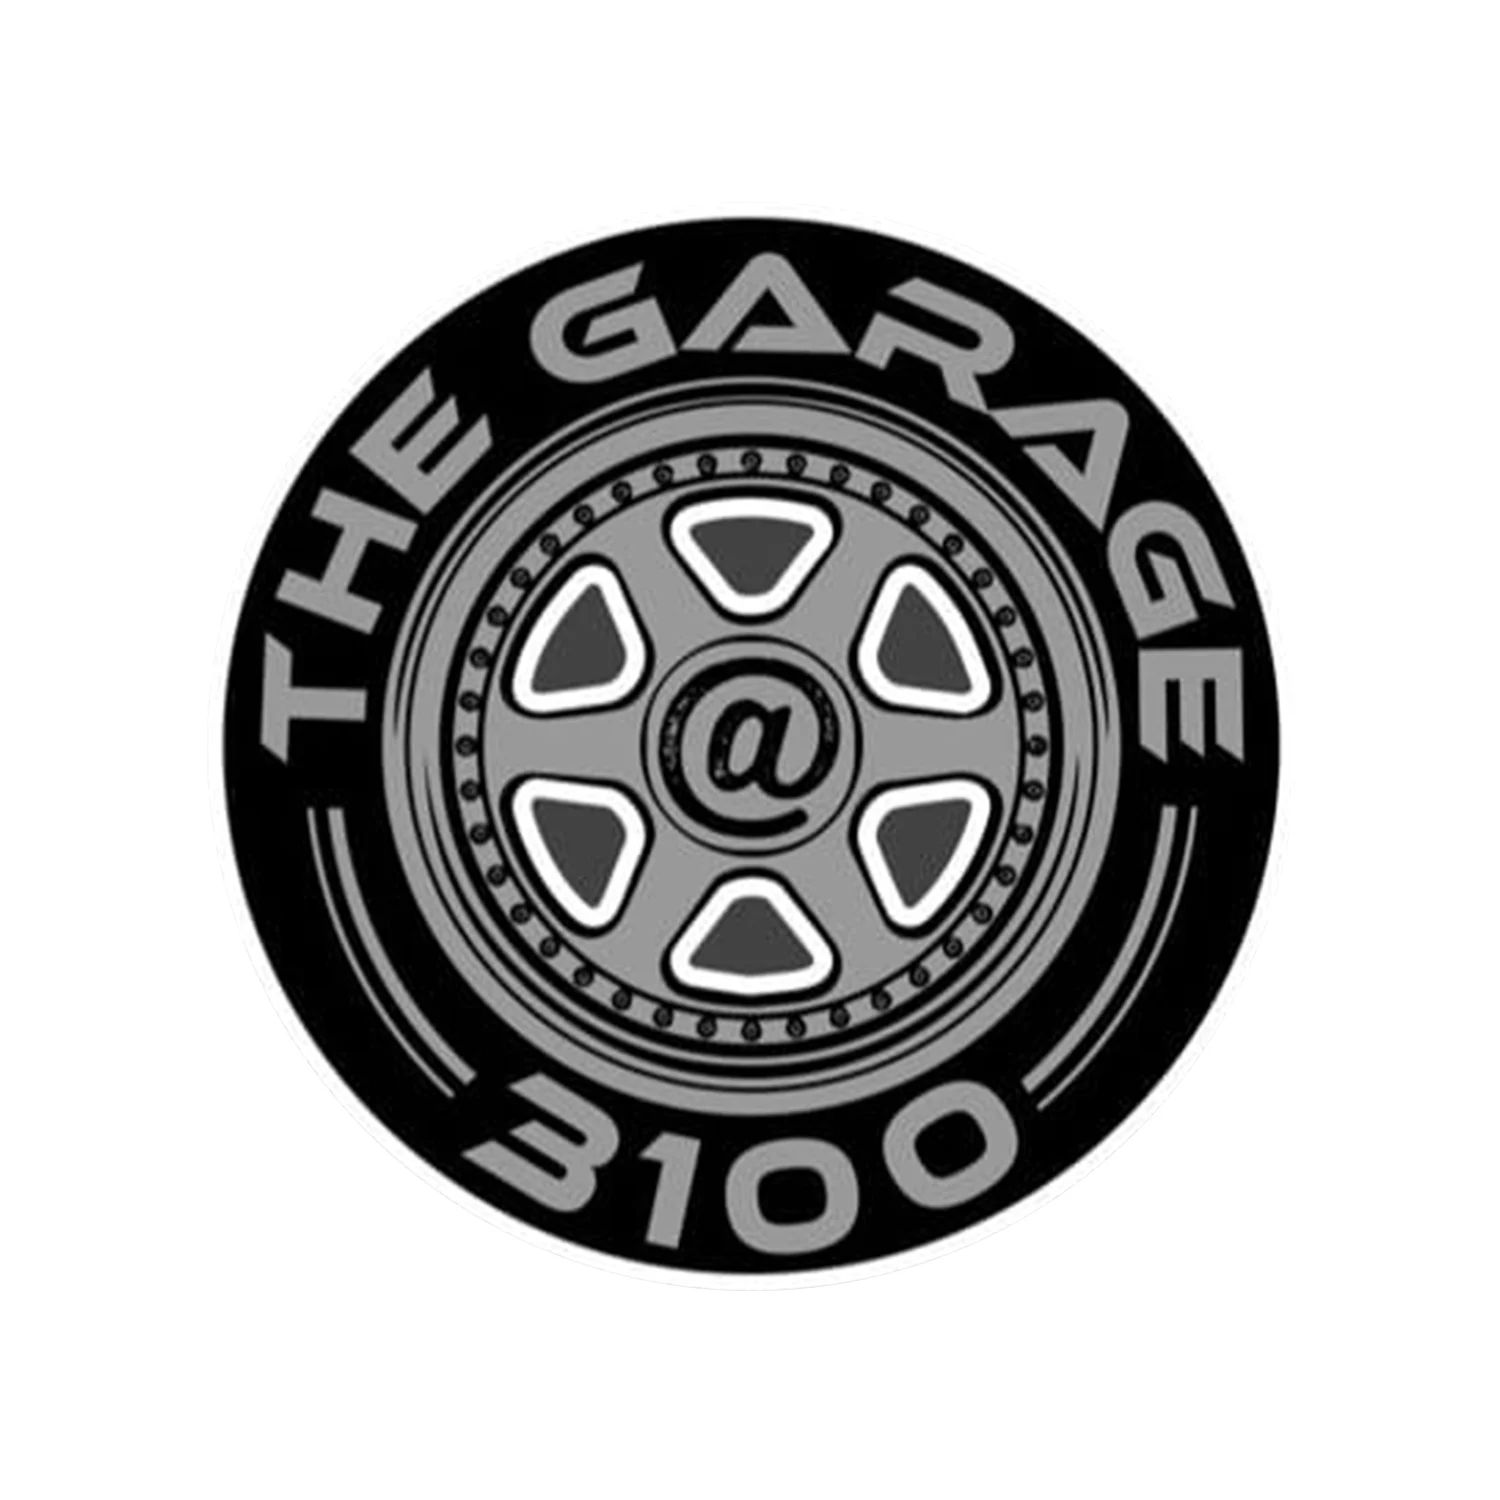 the garage at 3100